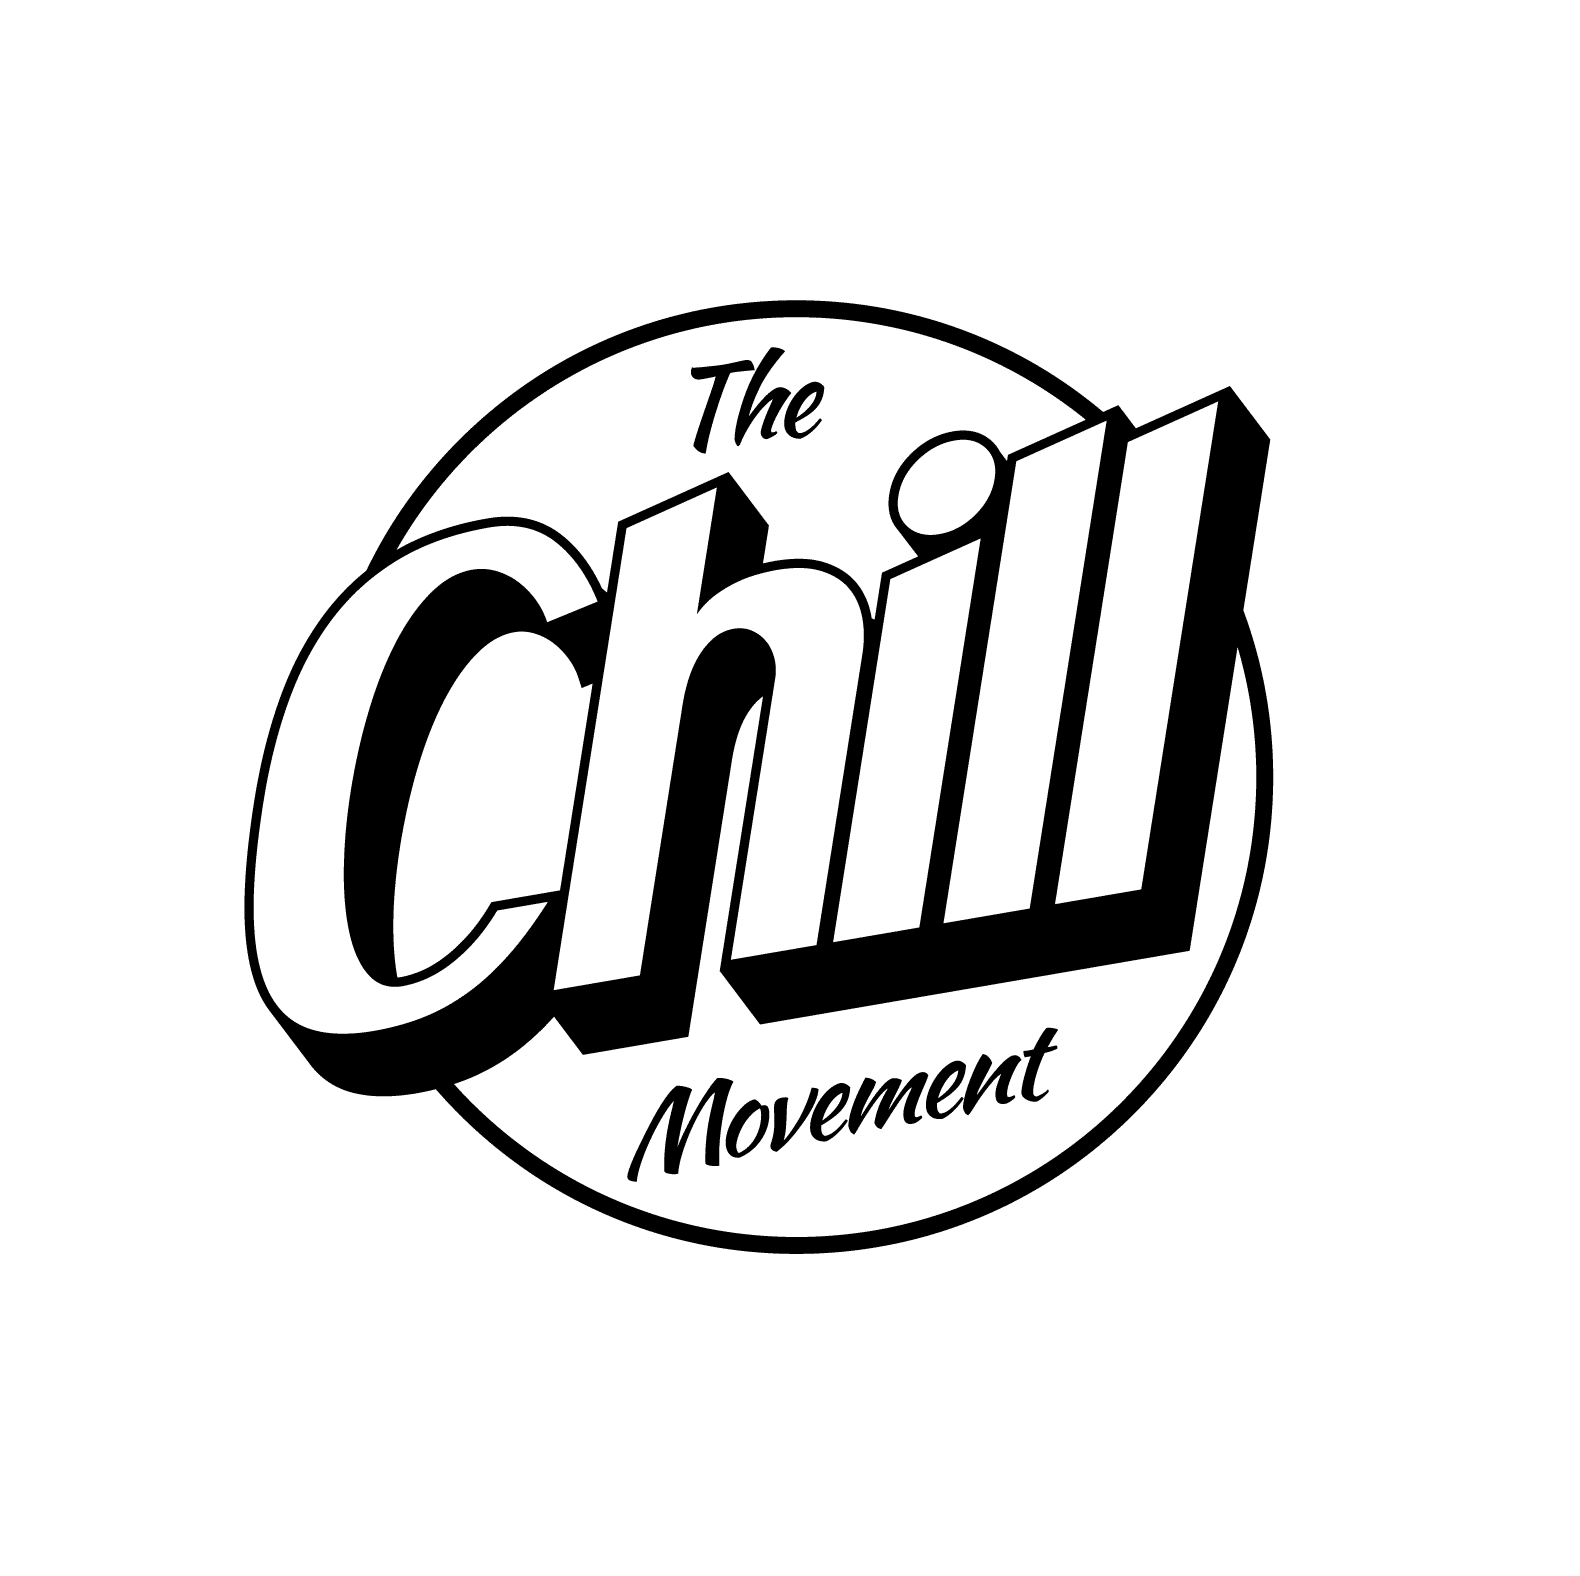 The Chill Movement